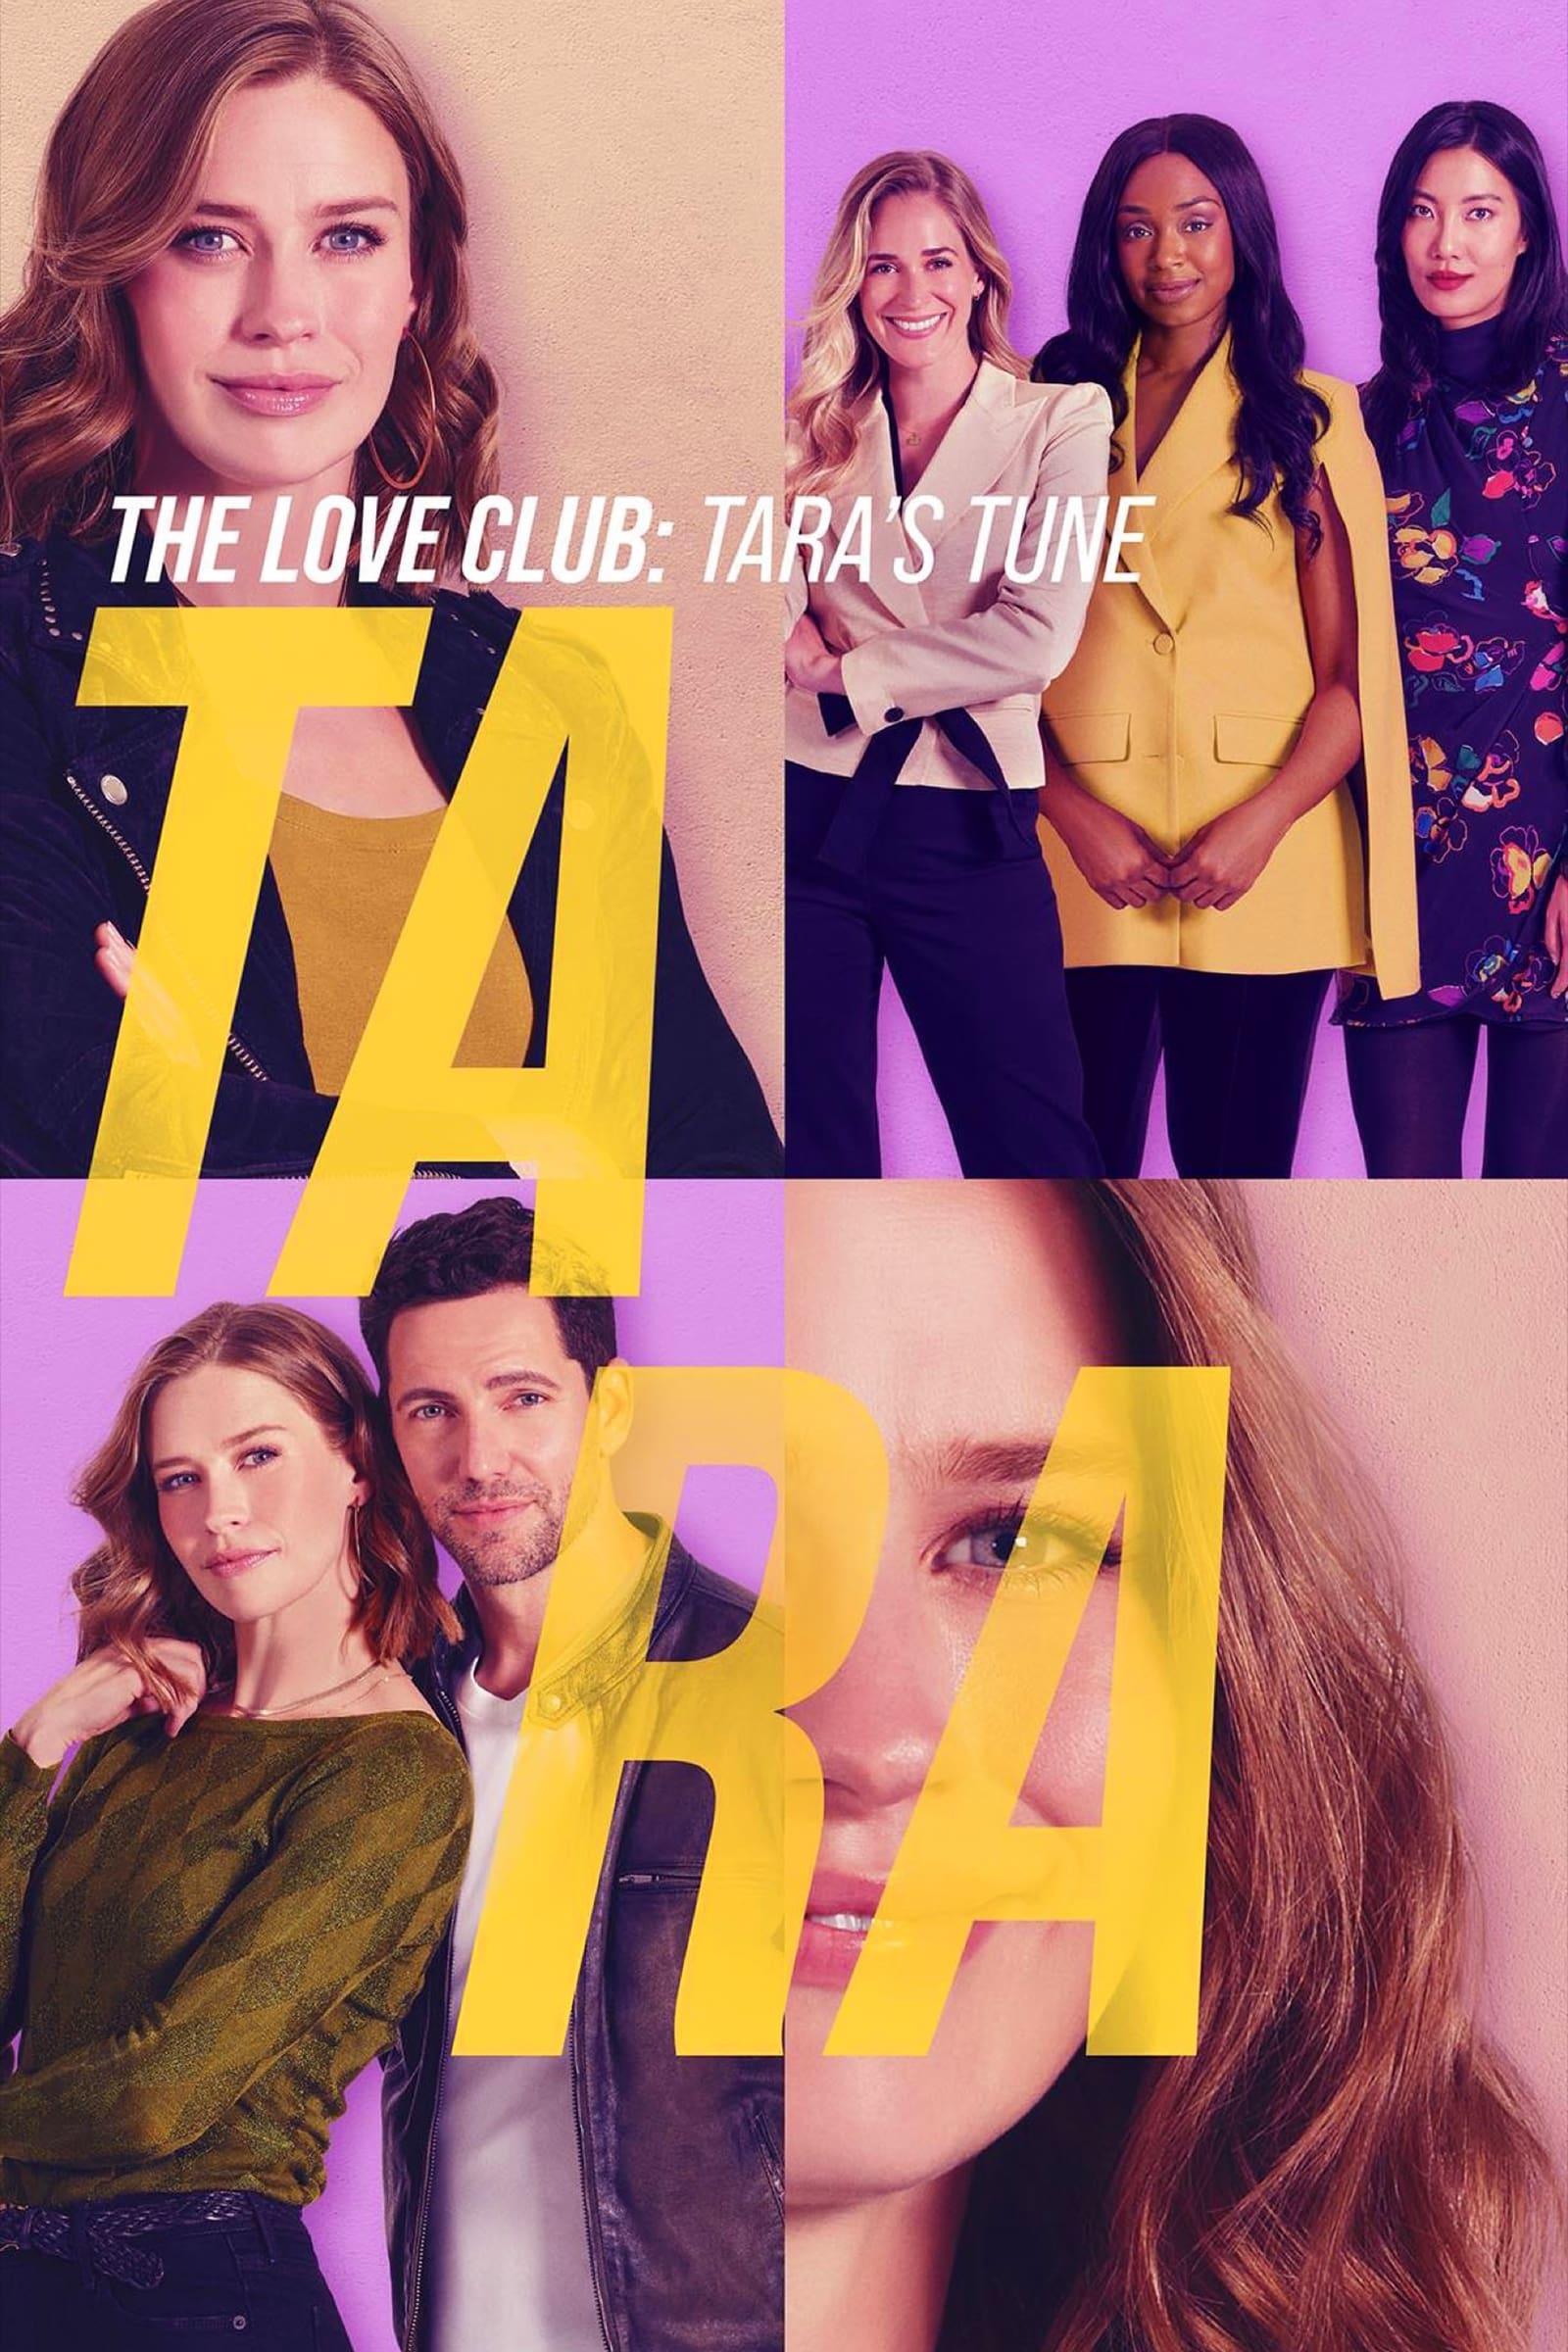 The Love Club: Tara’s Tune poster